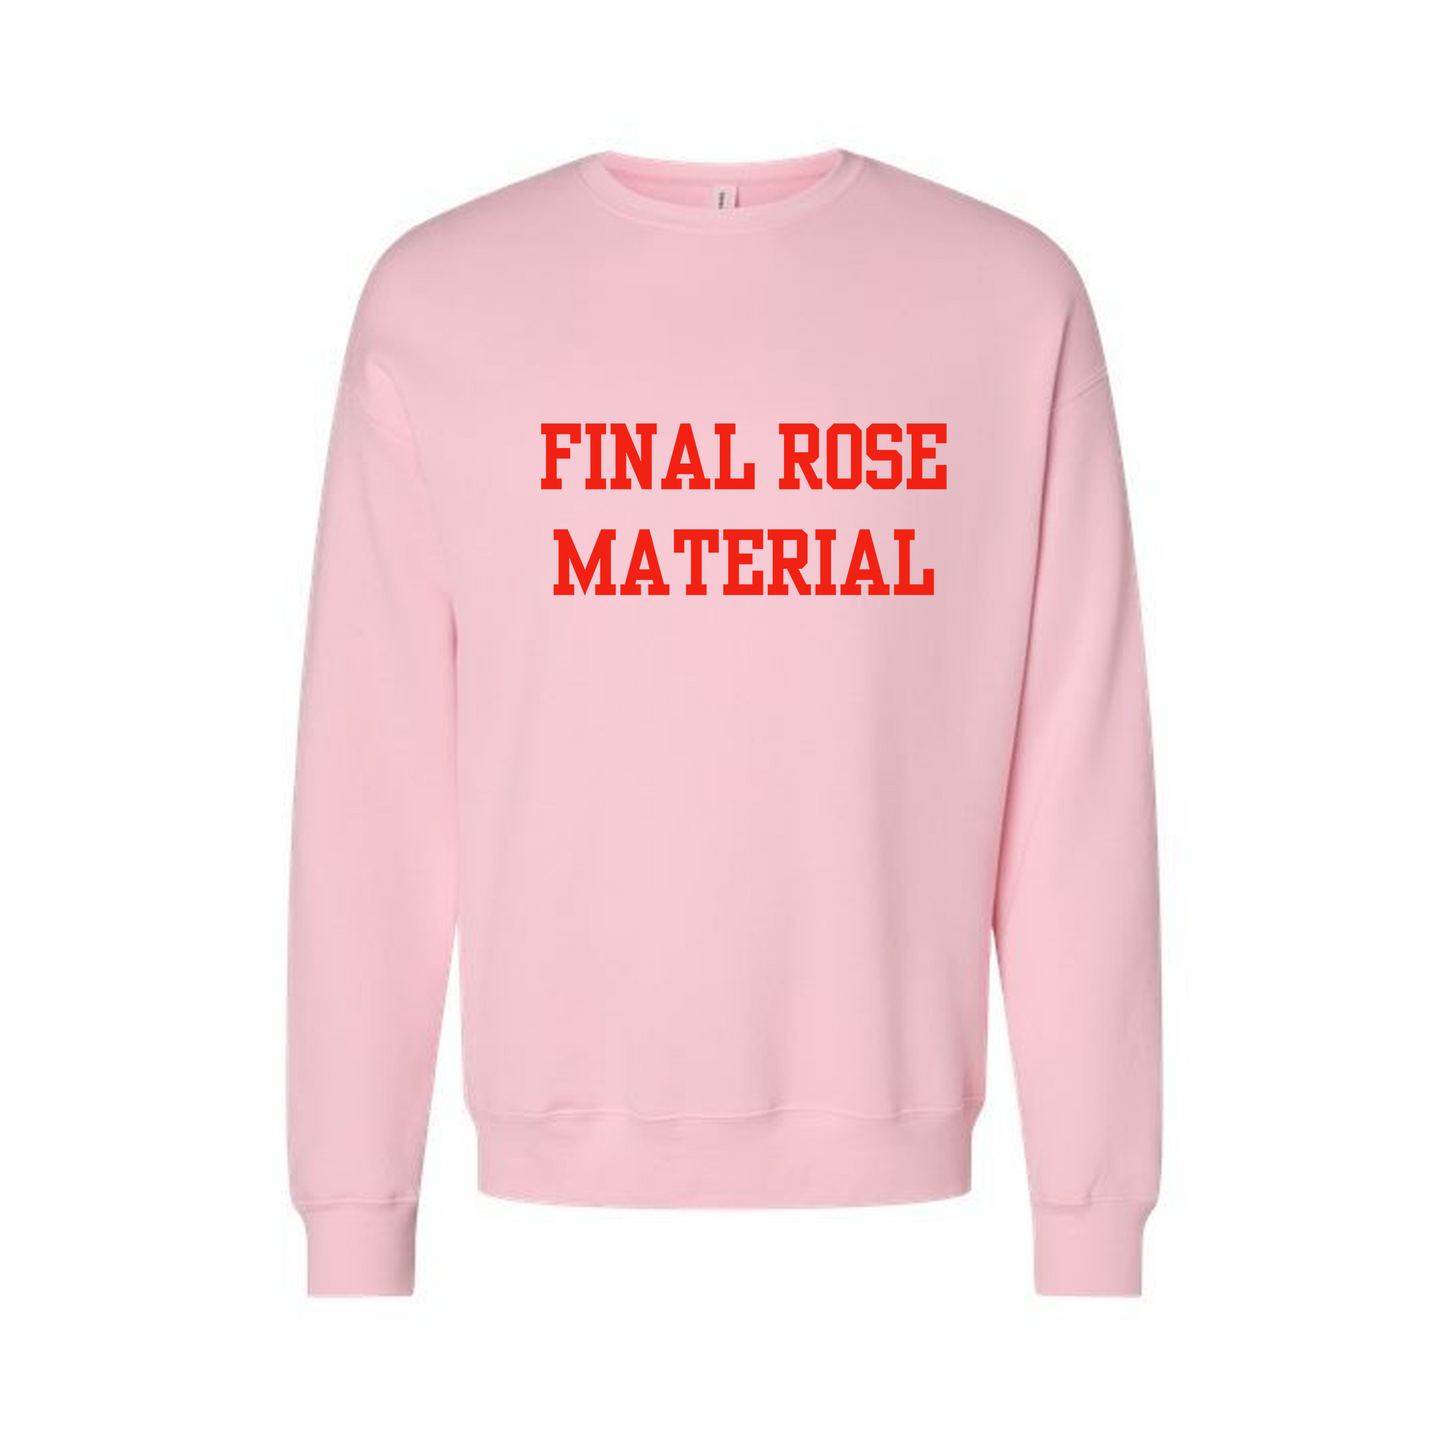 Final Rose Material (Red) - Sweatshirt (Light Pink)